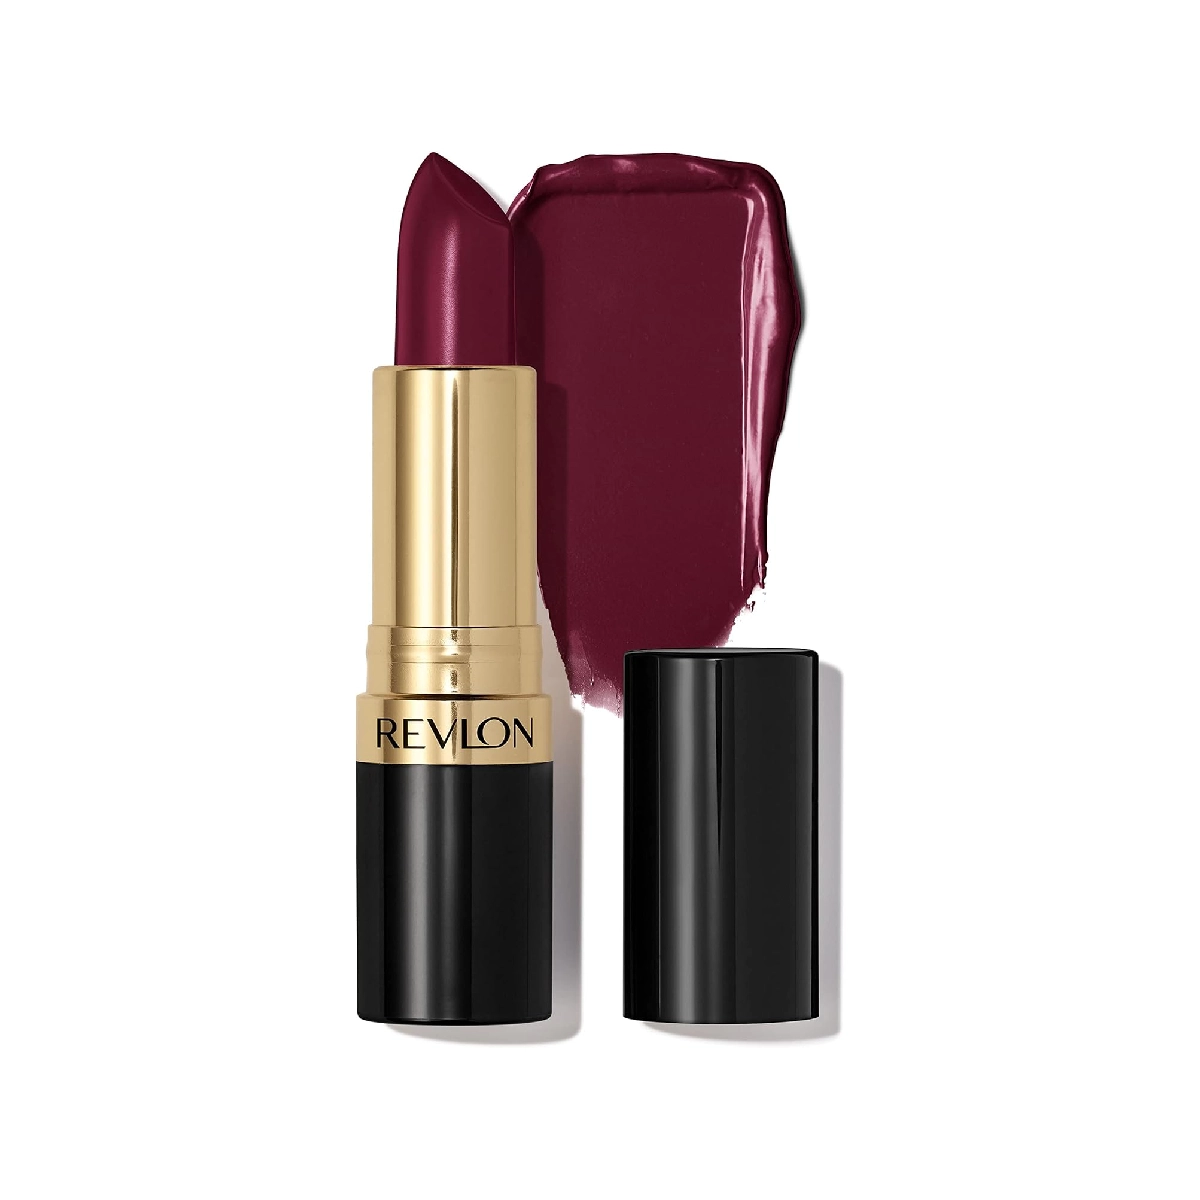 Revlon Super Lustrous Lipstick product on a white background.